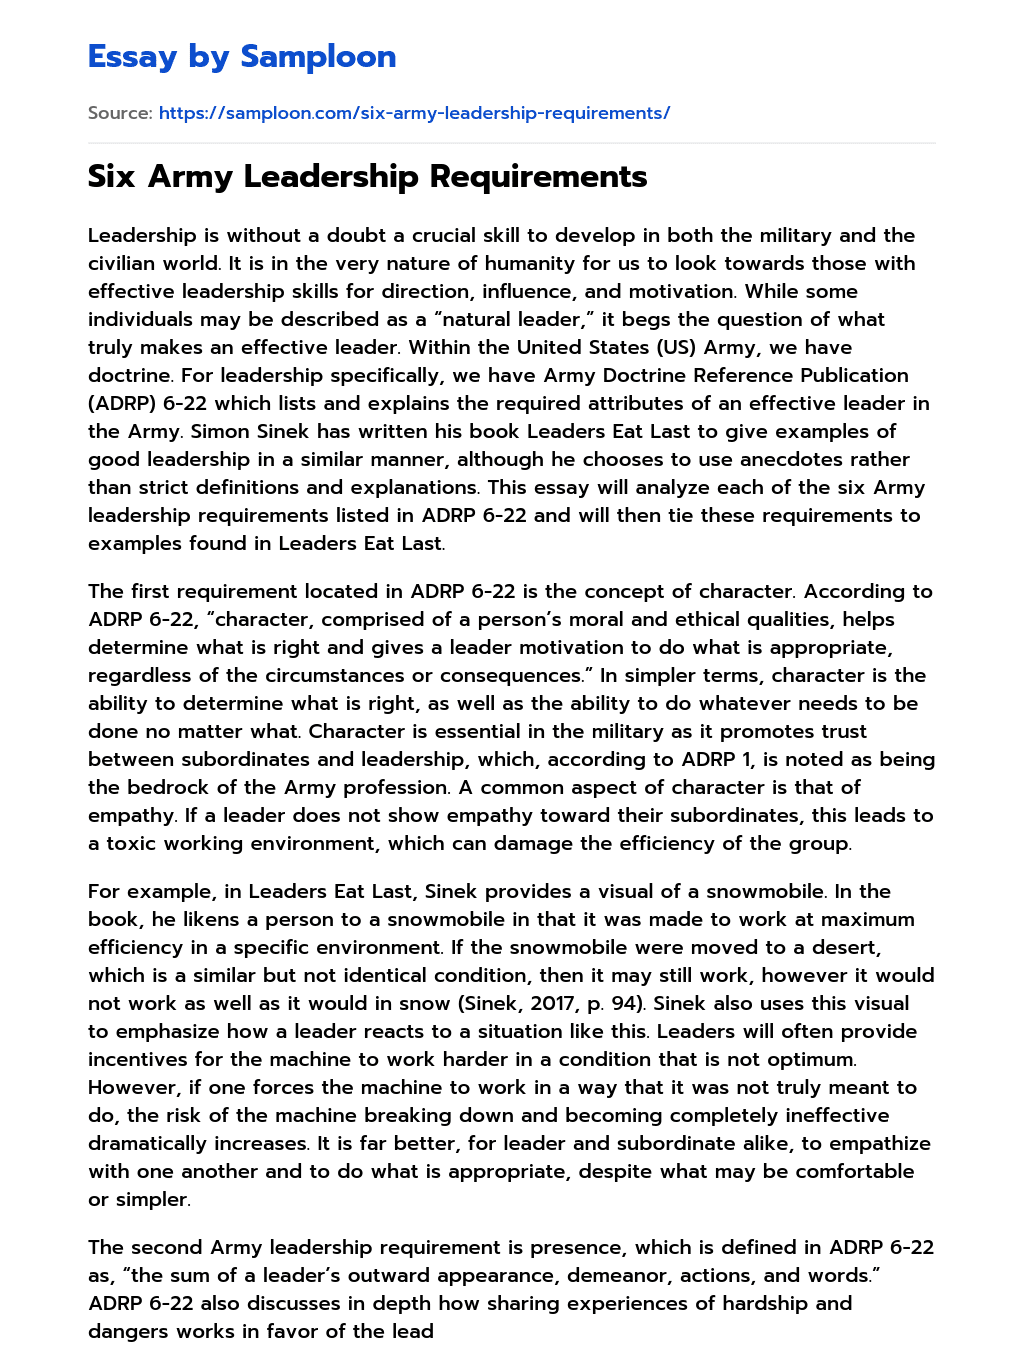 leadership development army essay